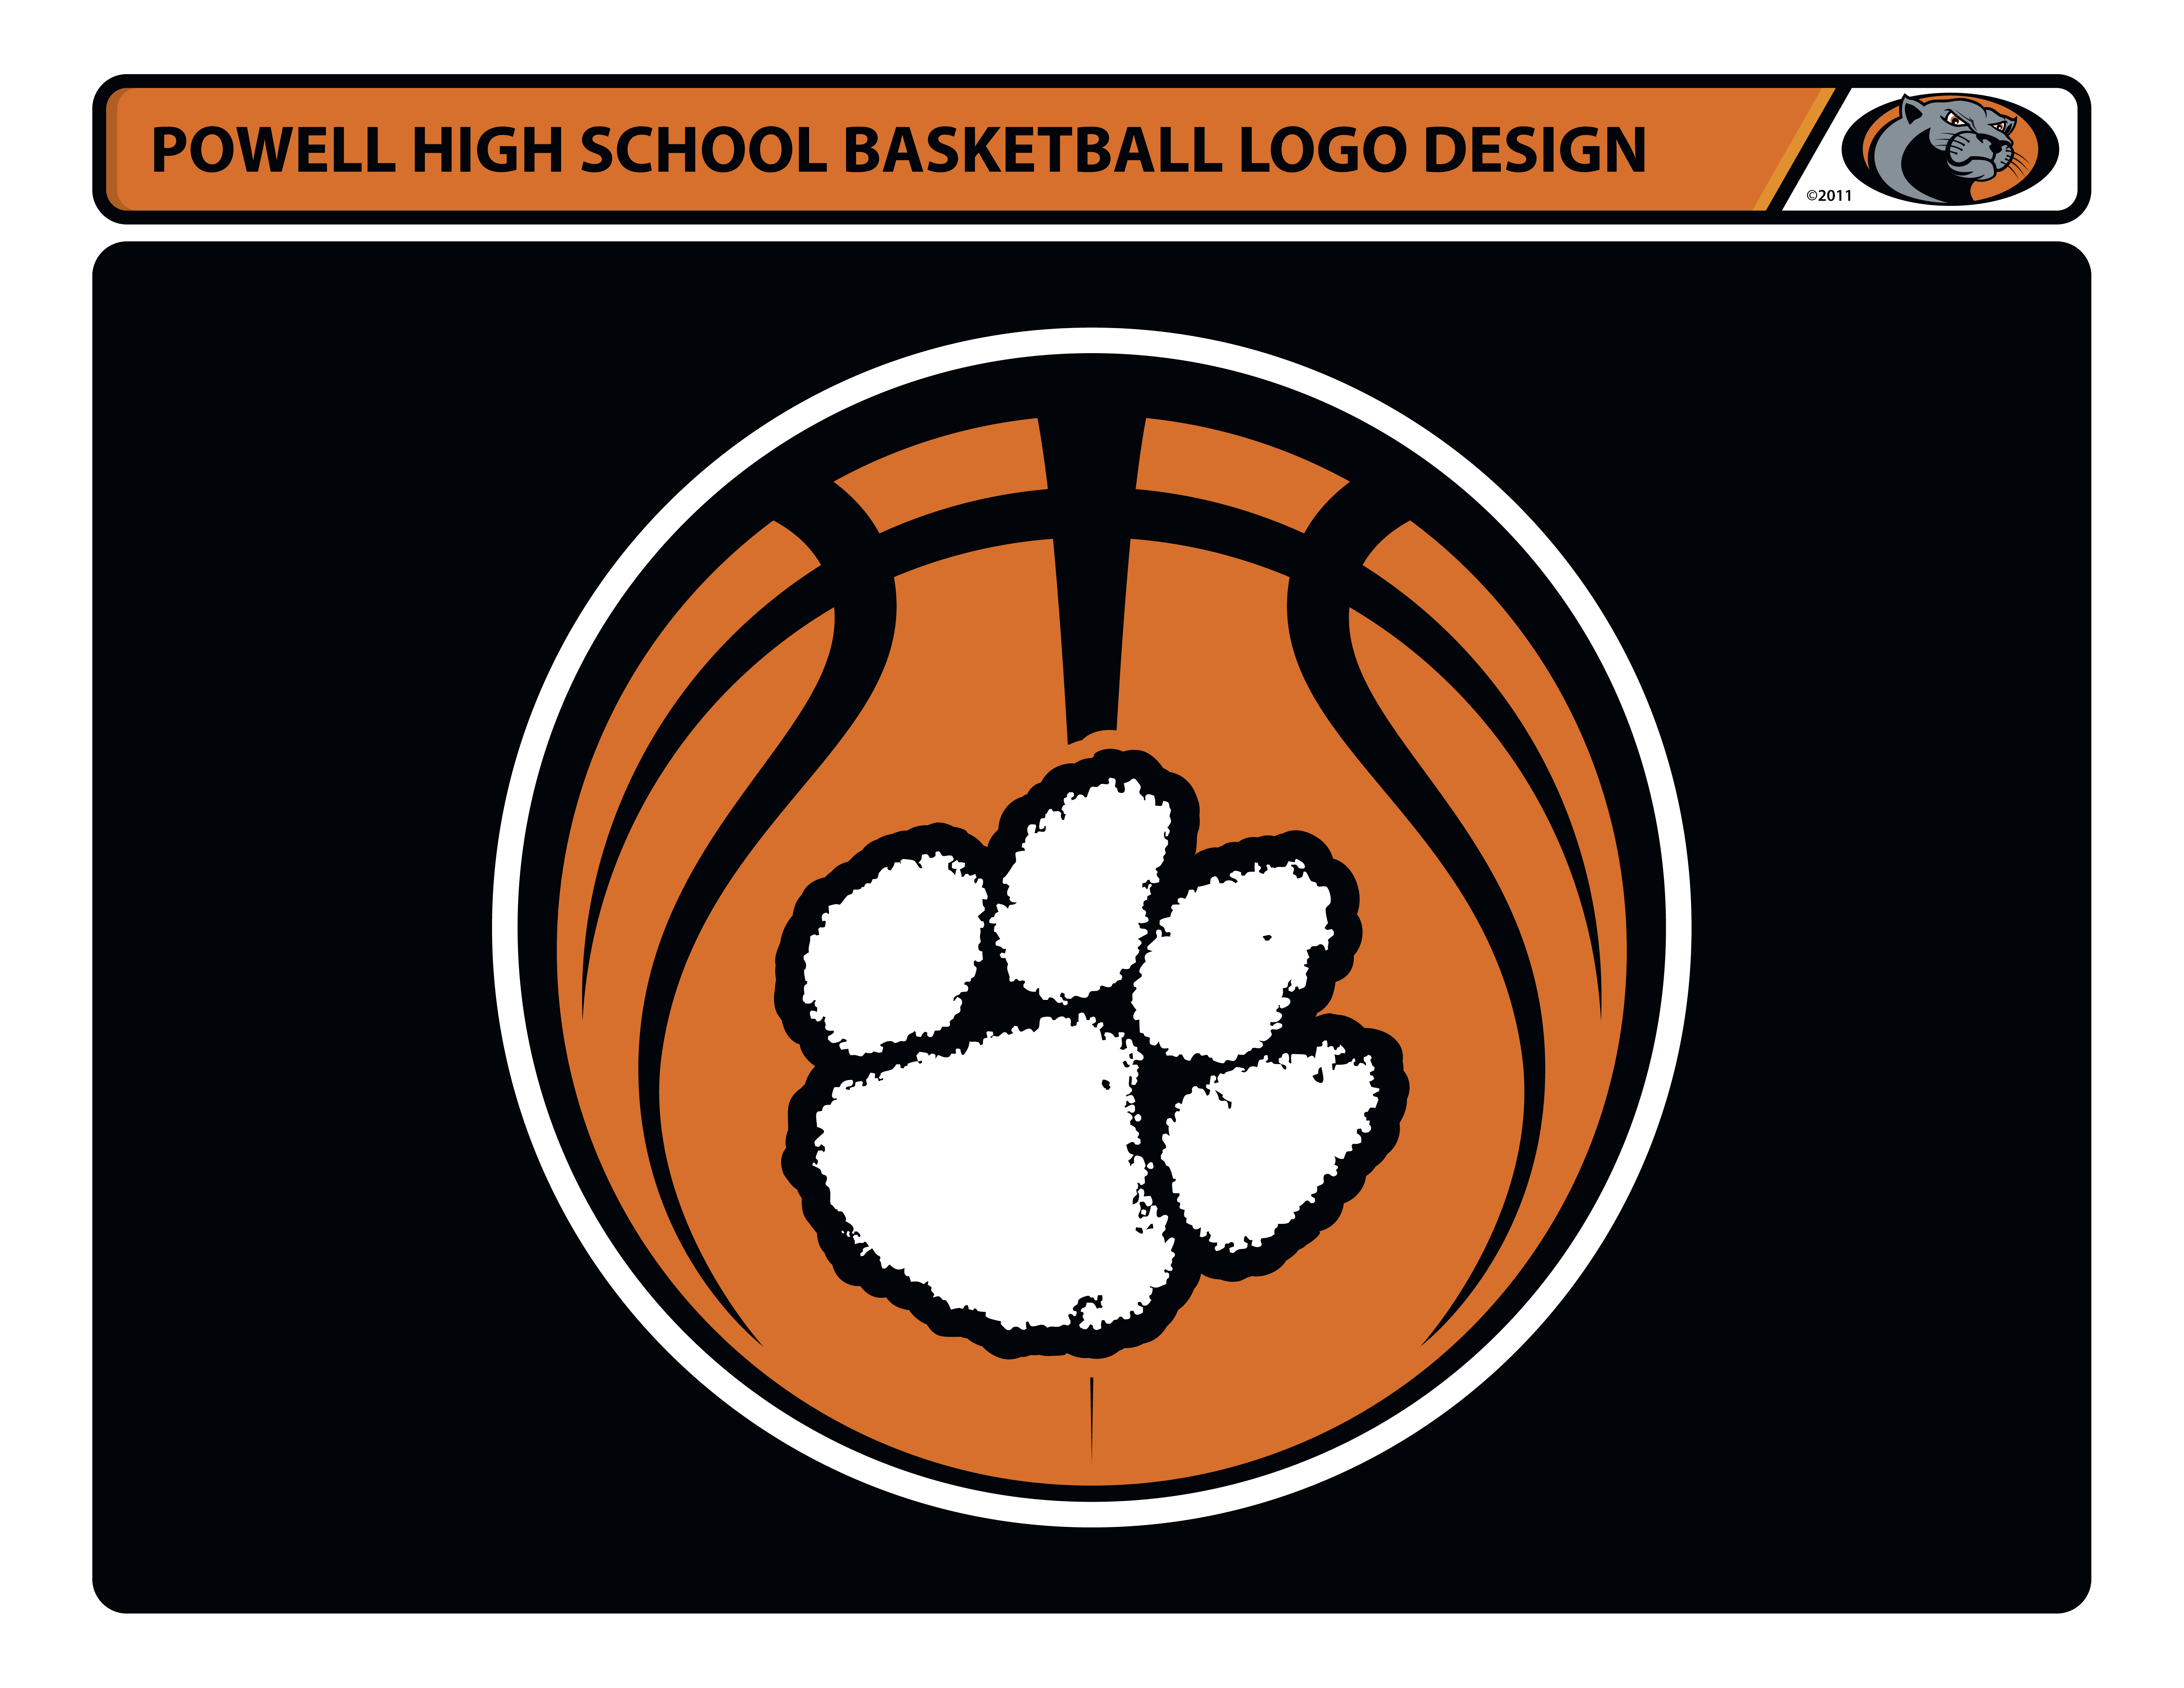 Powell High School Basketball Logo Design | Digital Portfolio